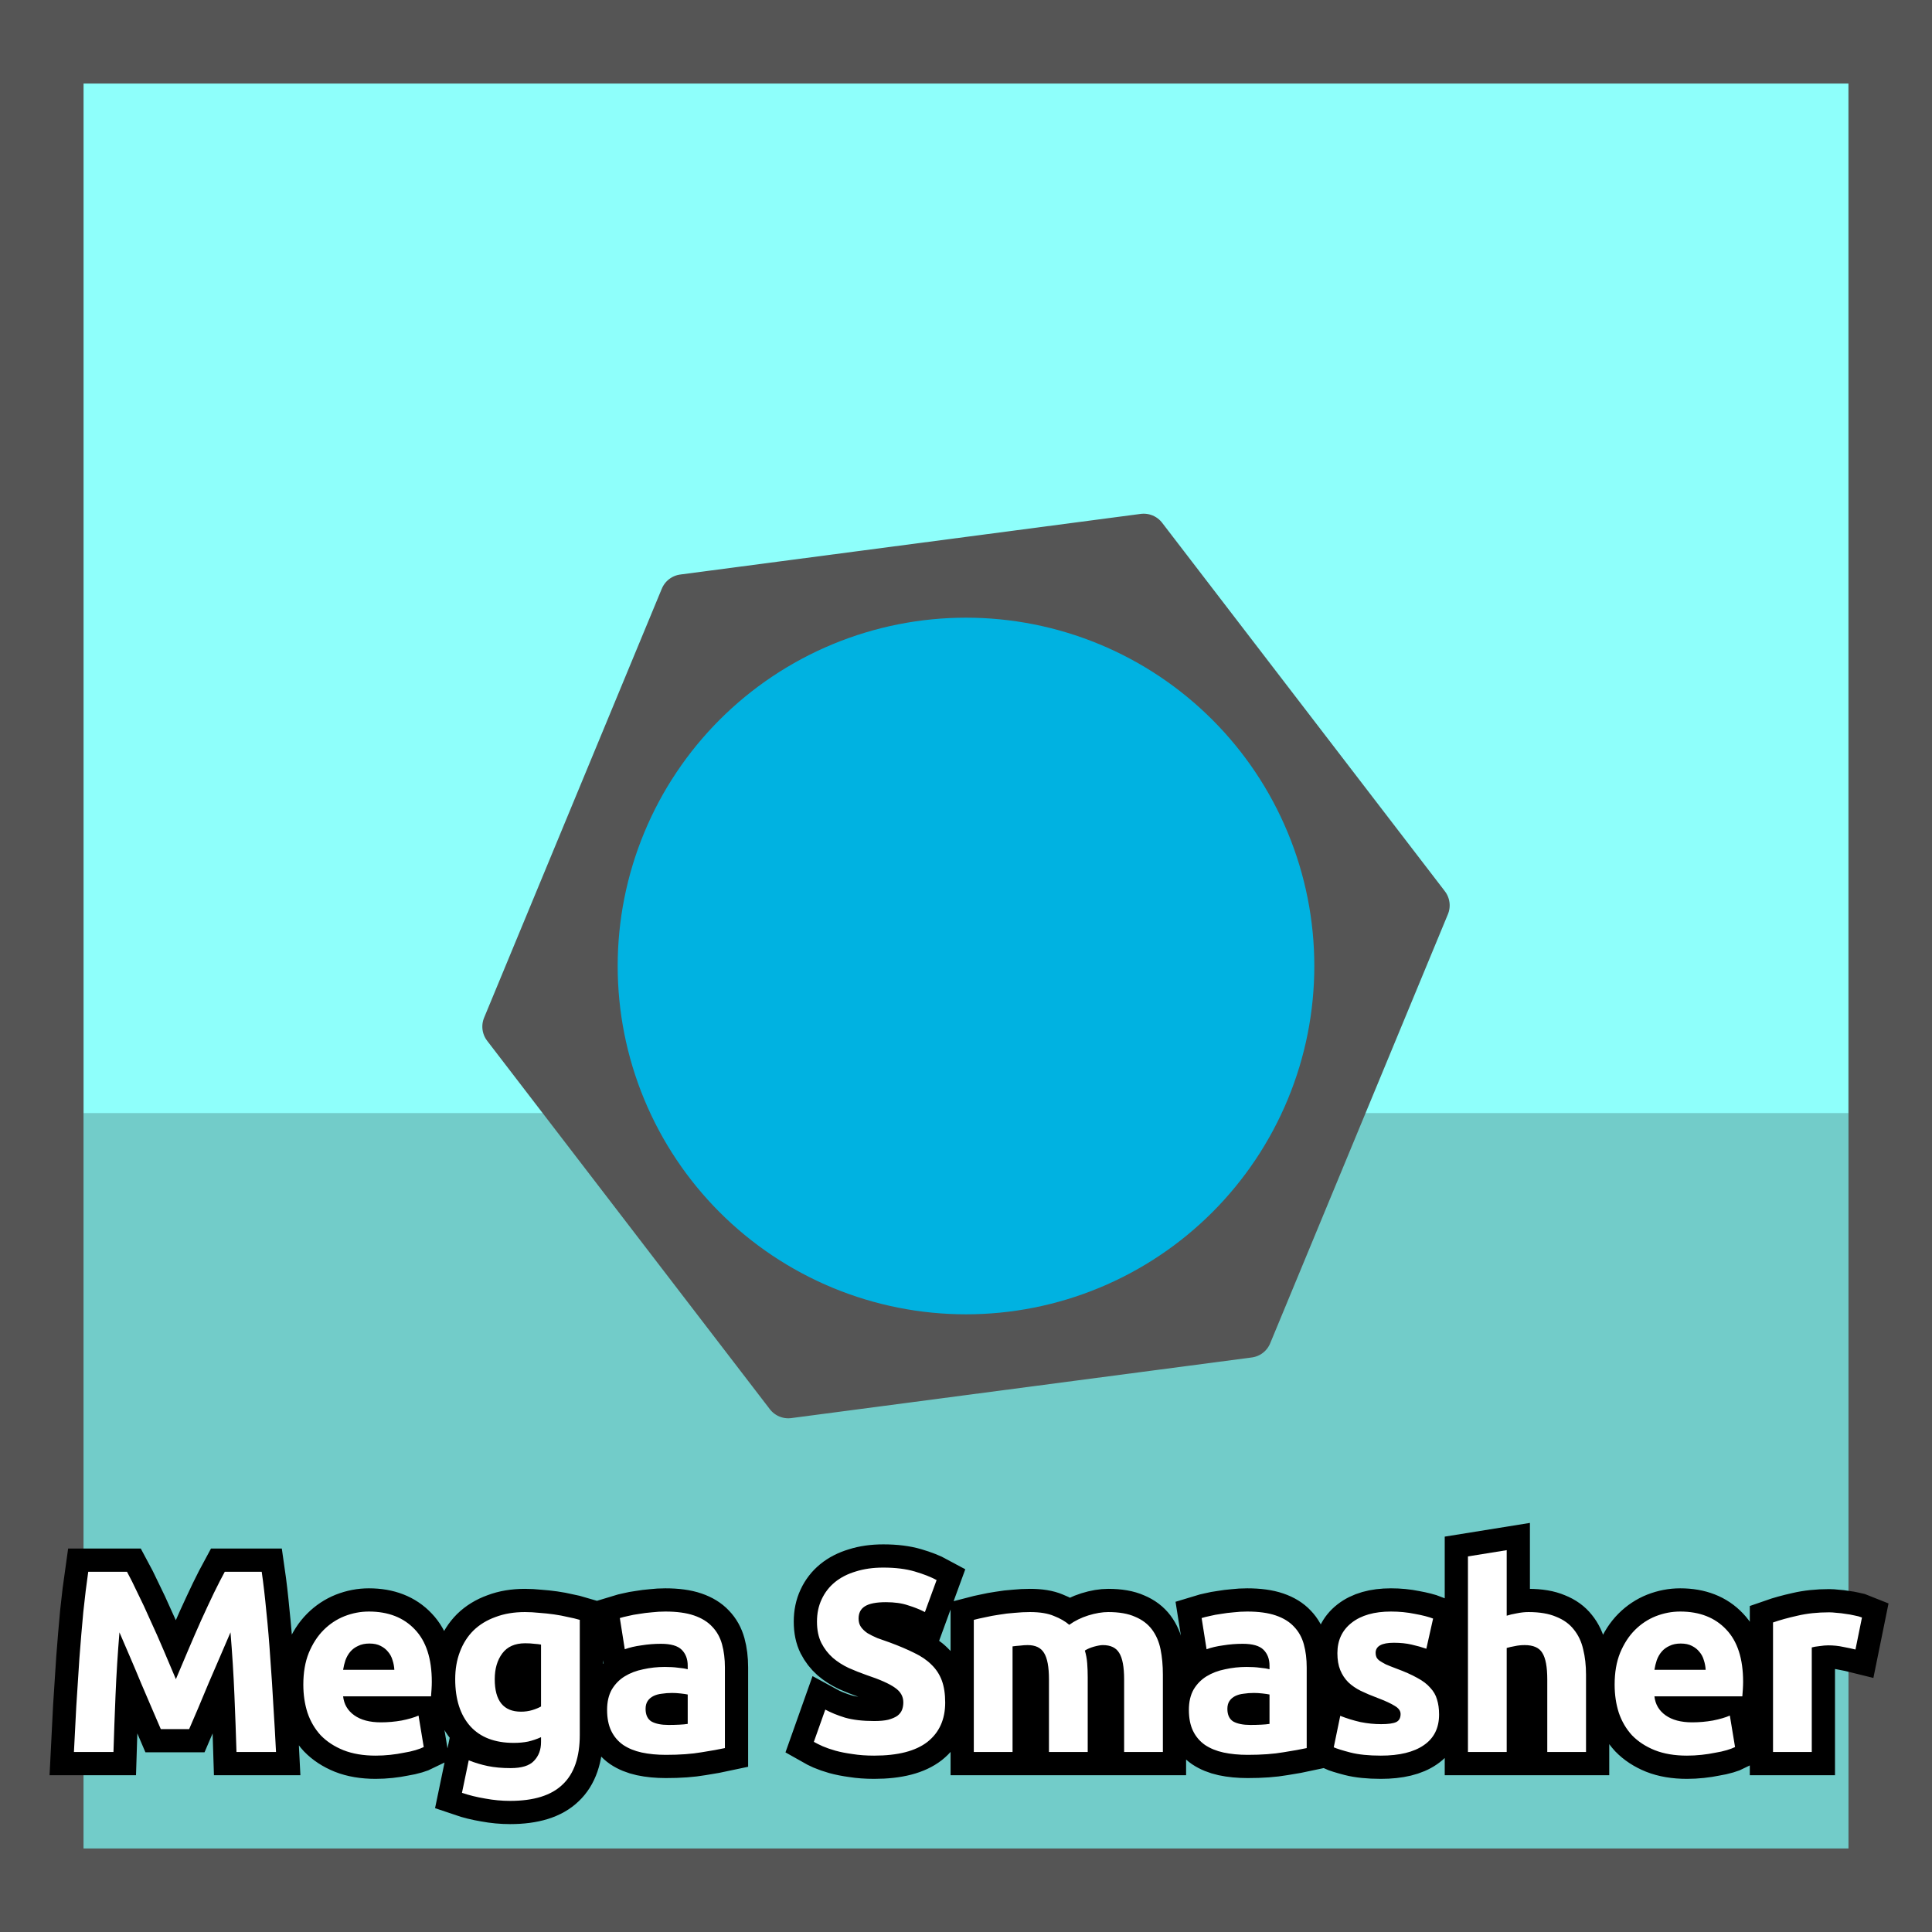 Smasher classes (Diep.io) - Atrocious Gameplay Wiki